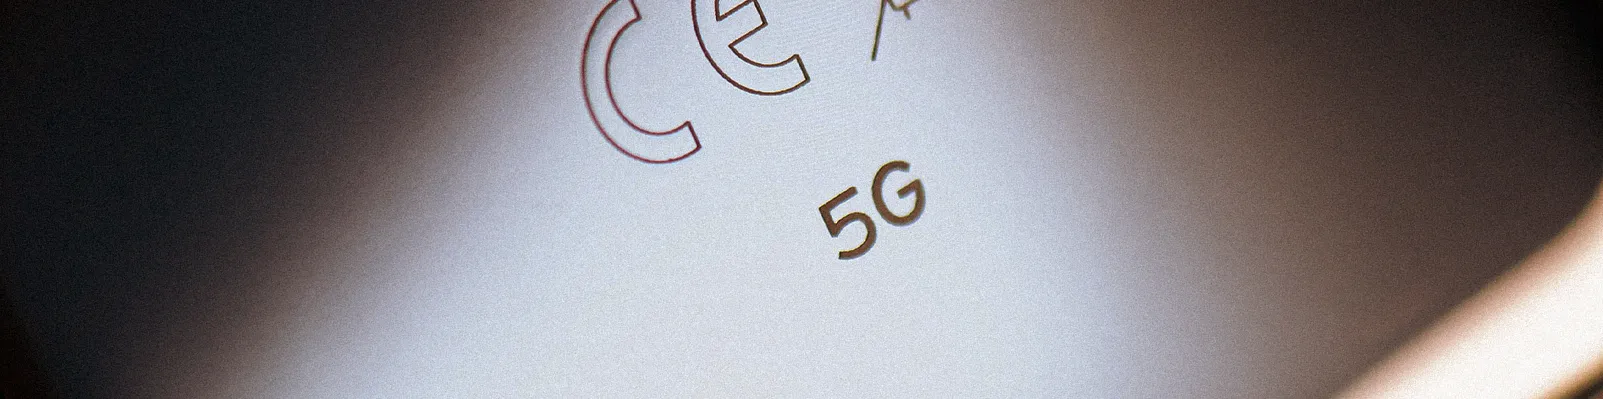 5G: entenda seu funcionamento e os benefícios dessa tecnologia.